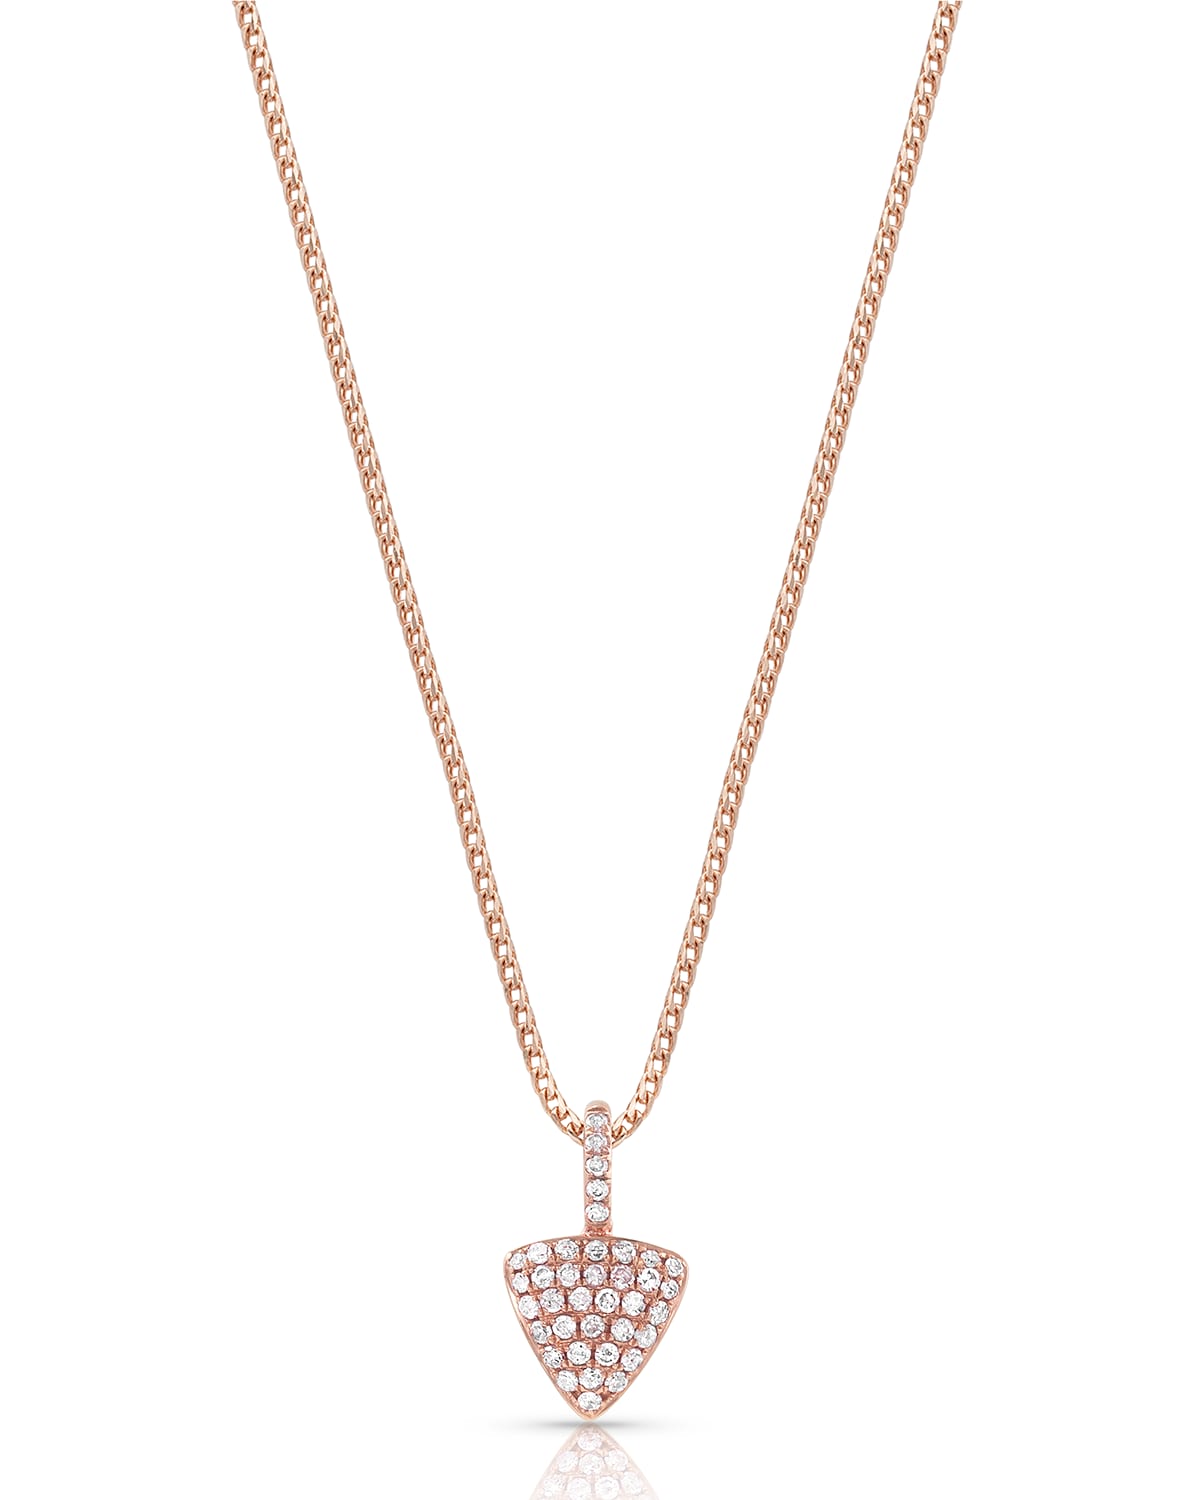 18k Rose Gold Diamond Triangle Pendant Necklace